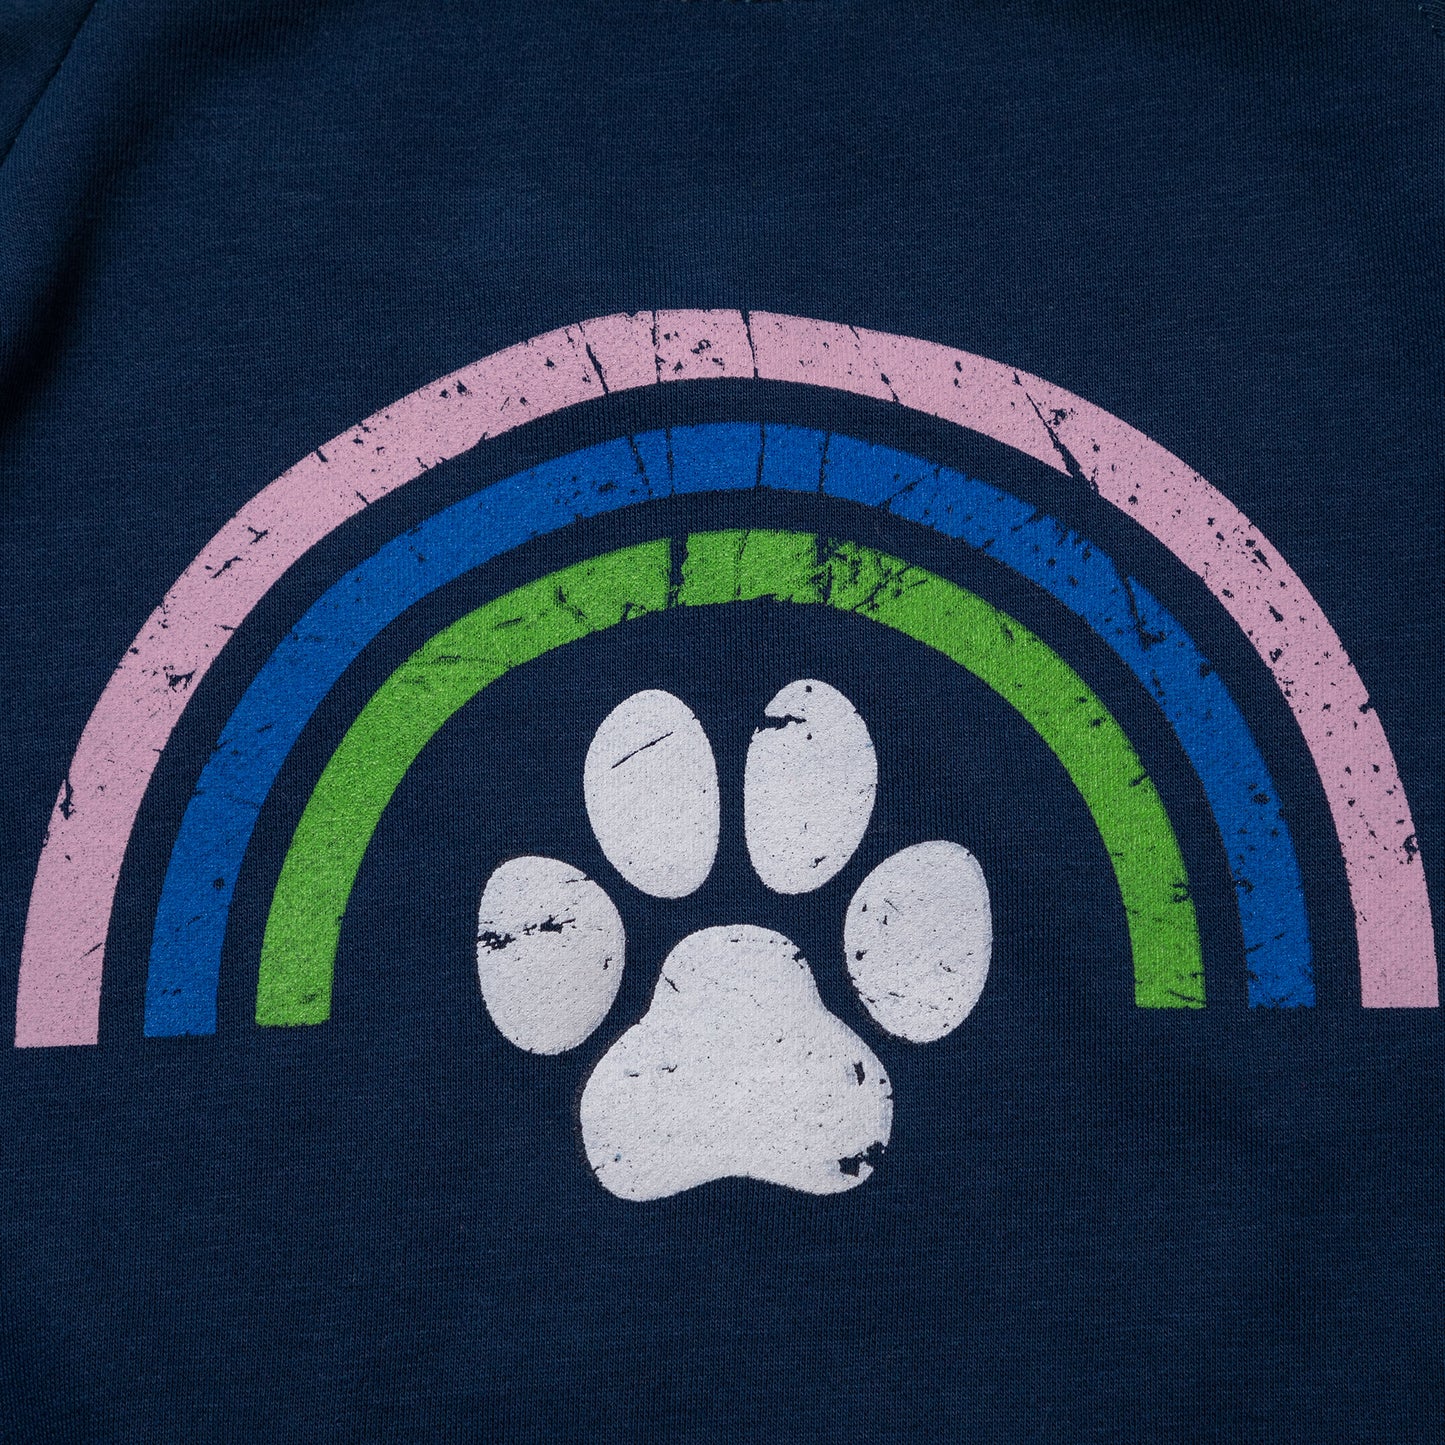 Rainbow & Paw Color-Block Crewneck Sweatshirt